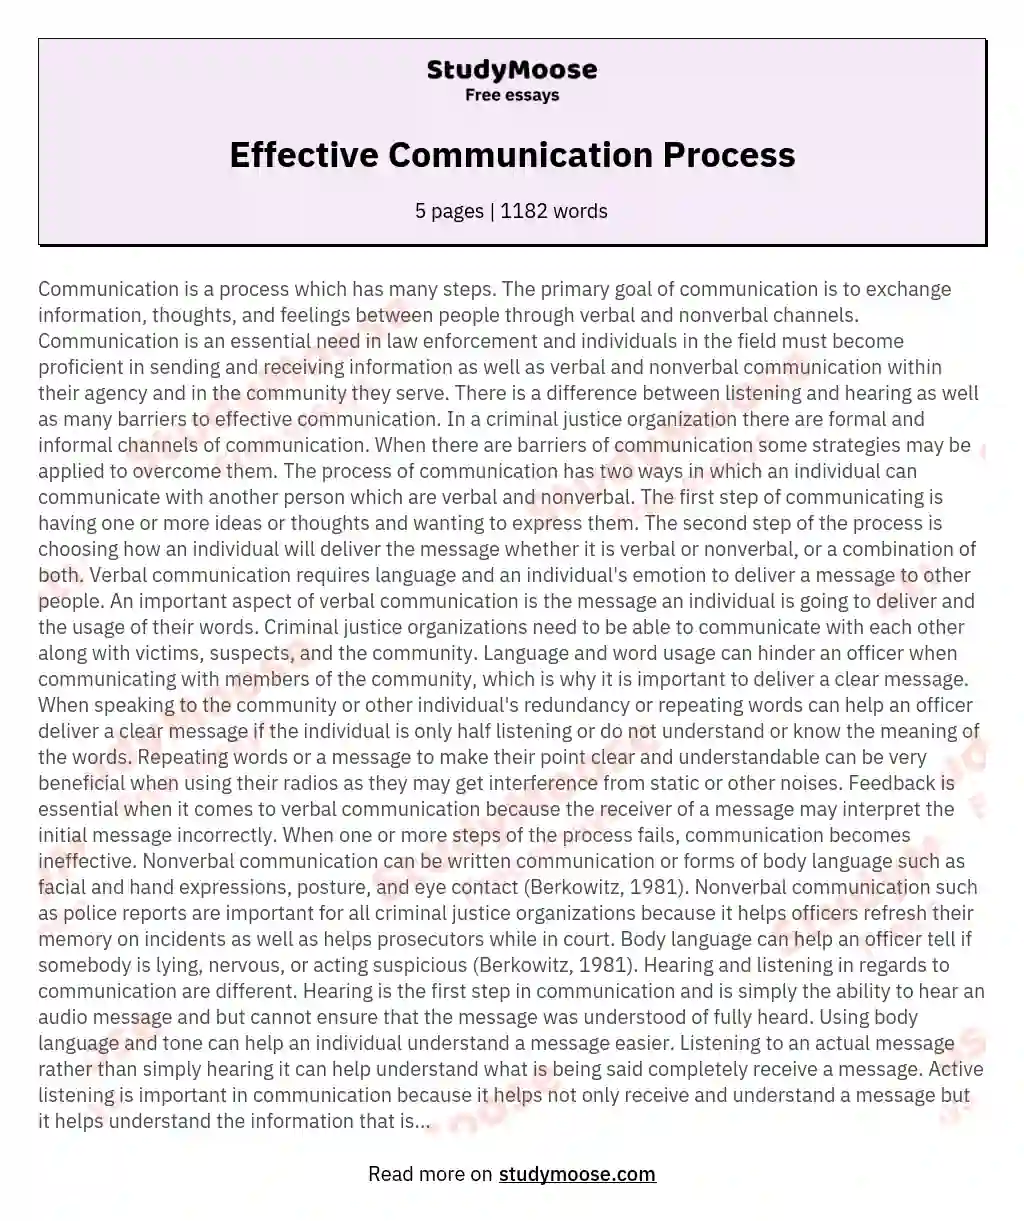 Effective Communication Process essay